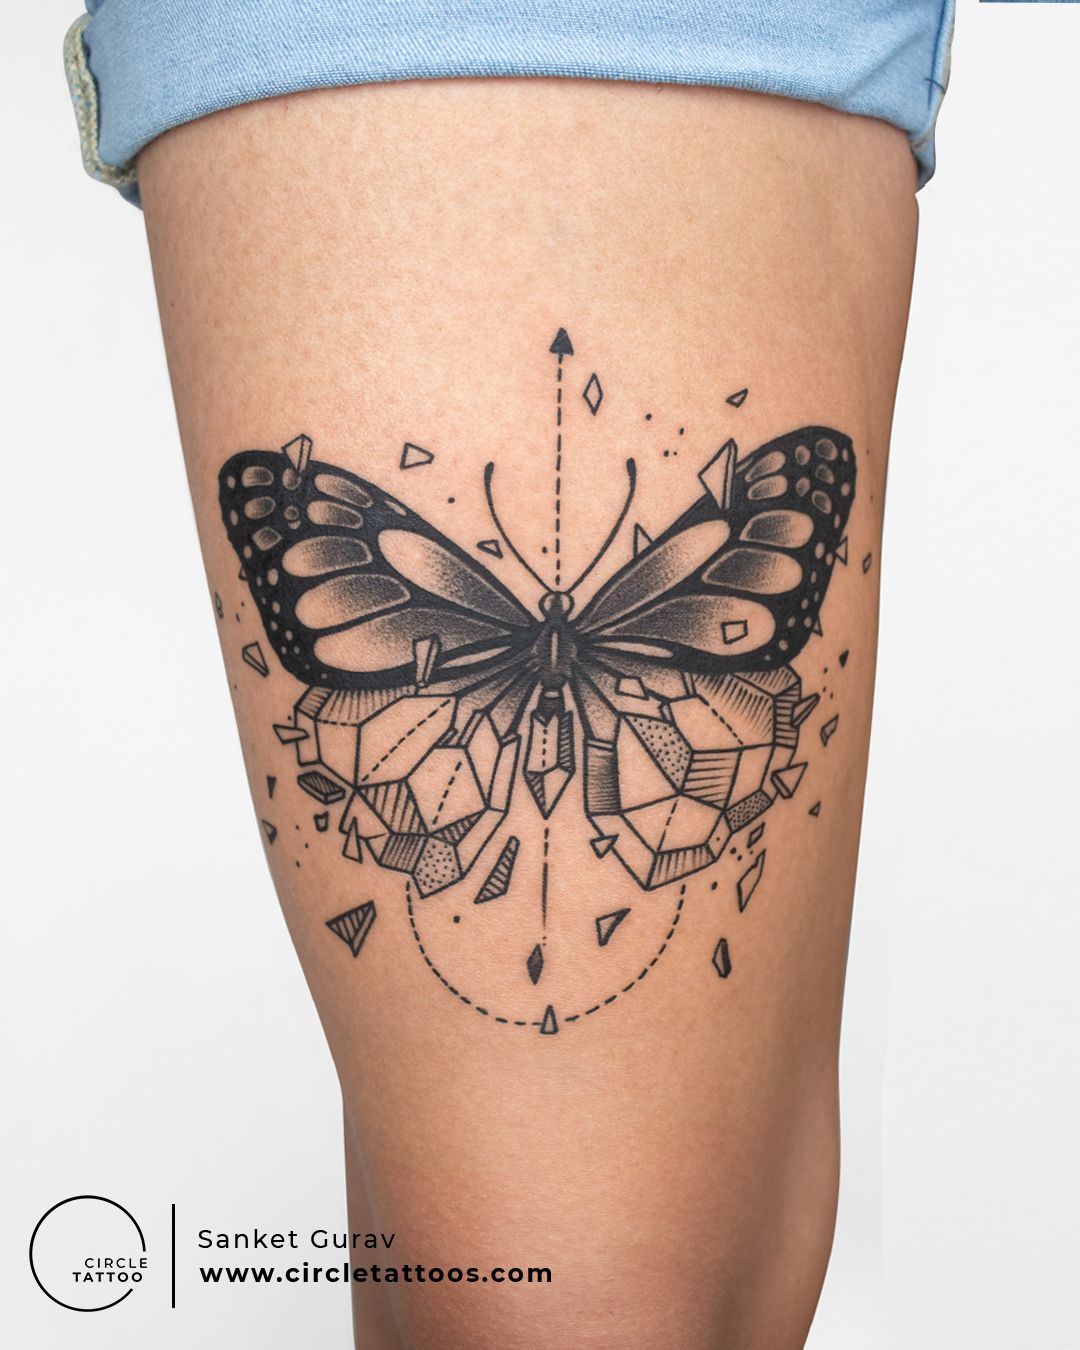 Sanket Ahire - Tattoo Artist - Self-employed | LinkedIn